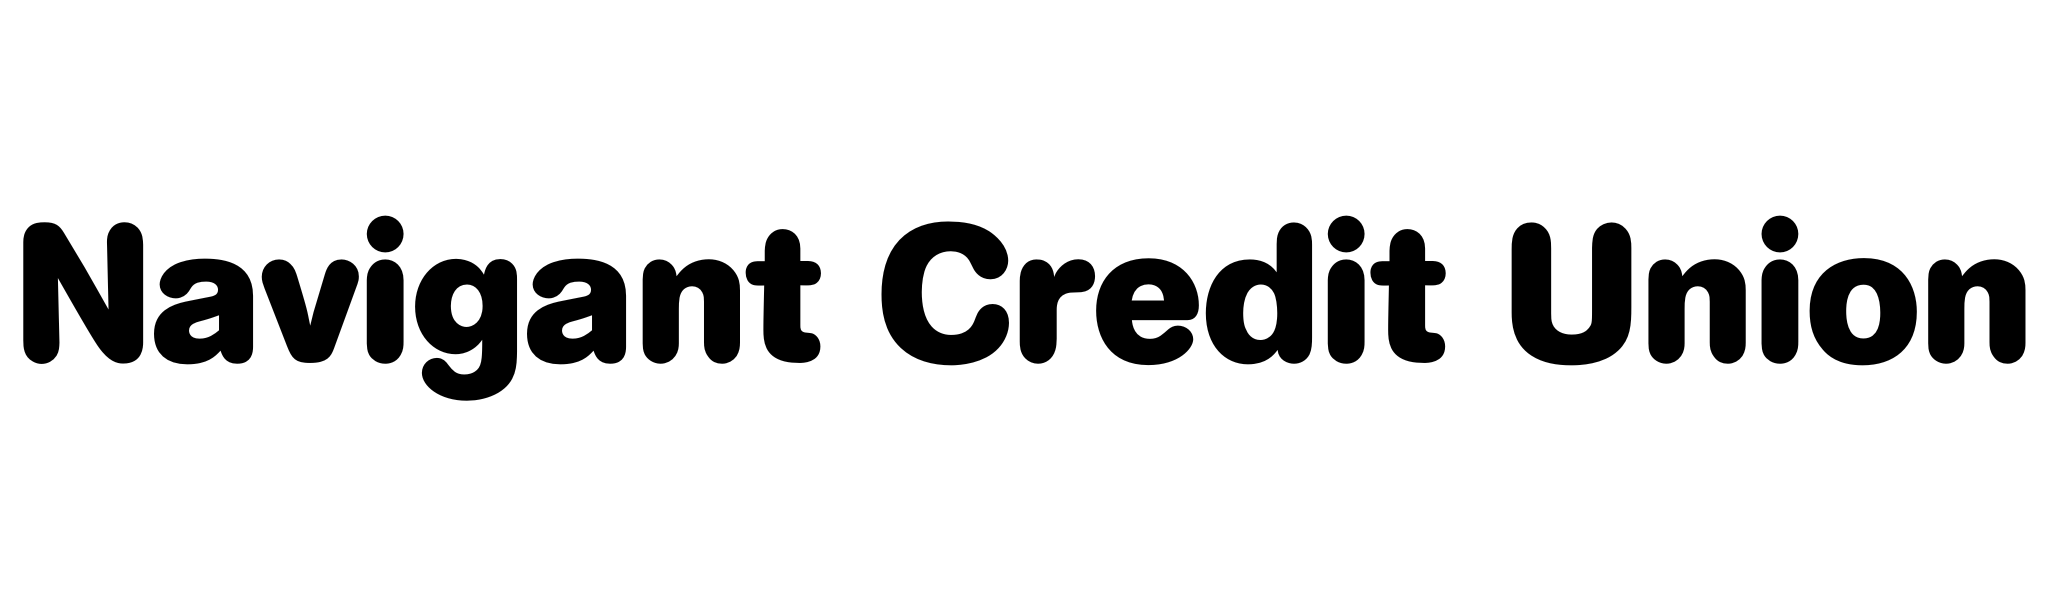 Navigant Credit Union (Bronze)